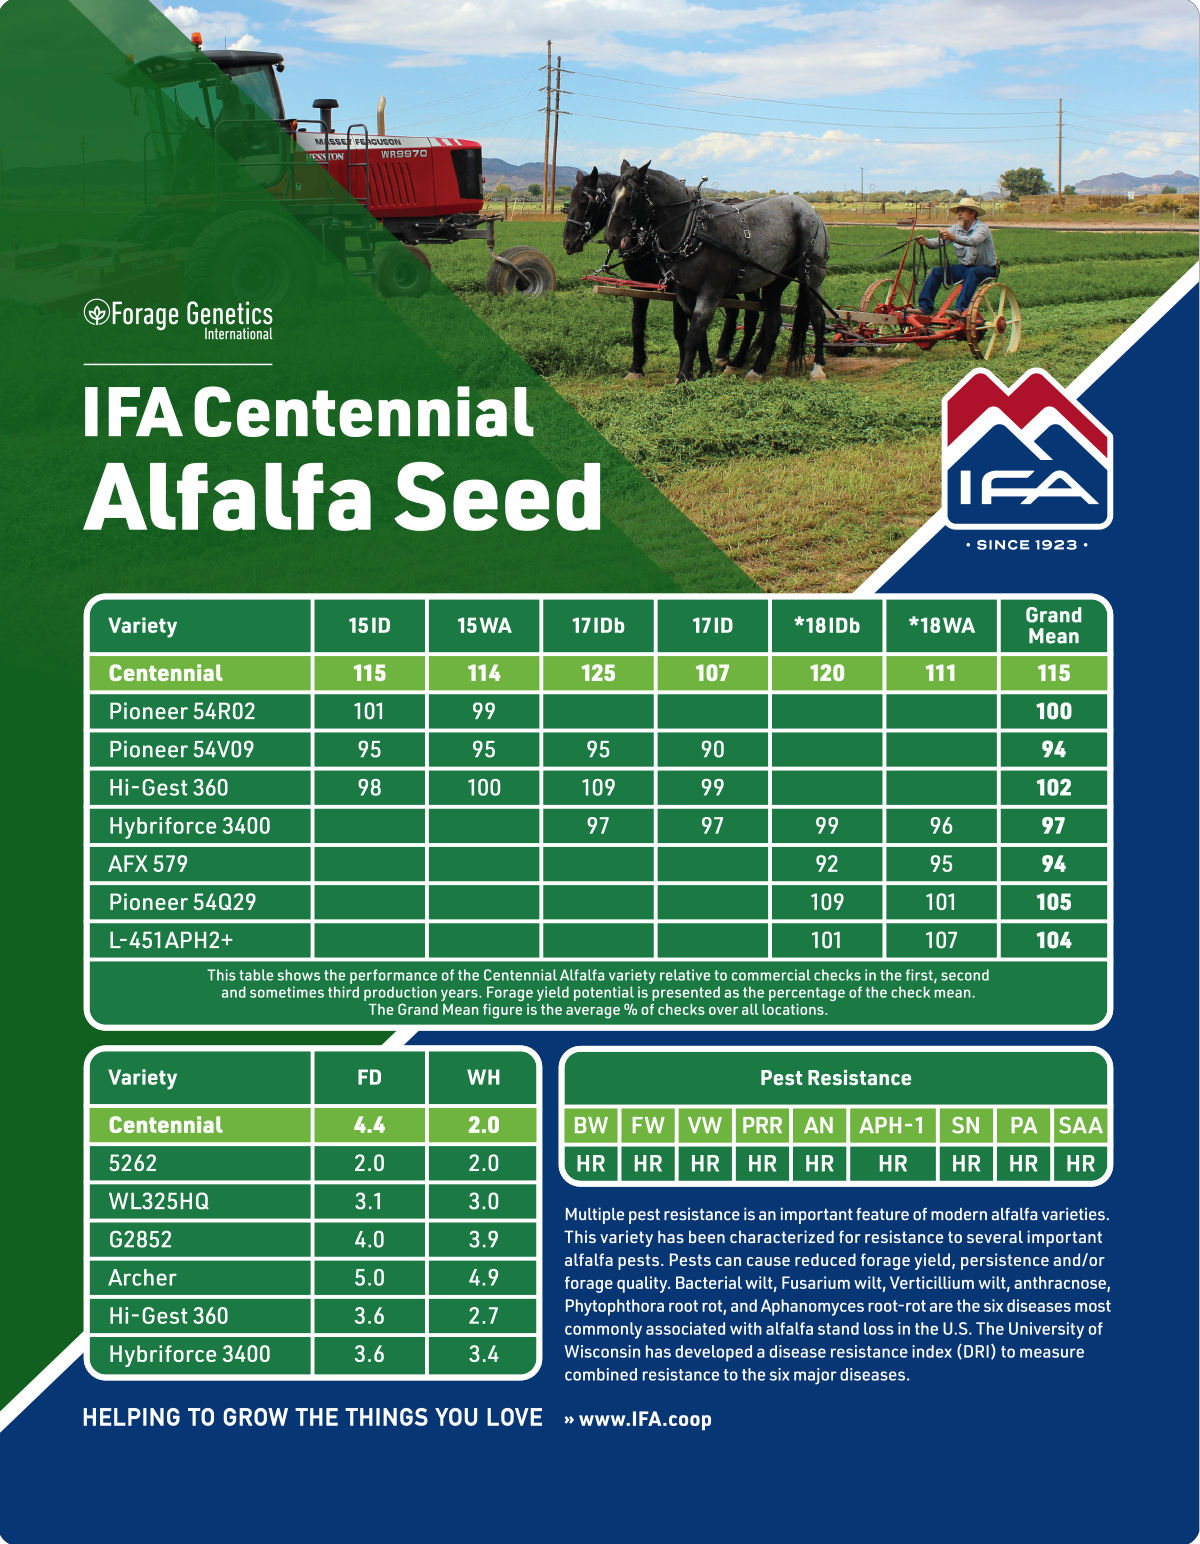 IFA_Blog_Alfalfa Seed Selection4 copy